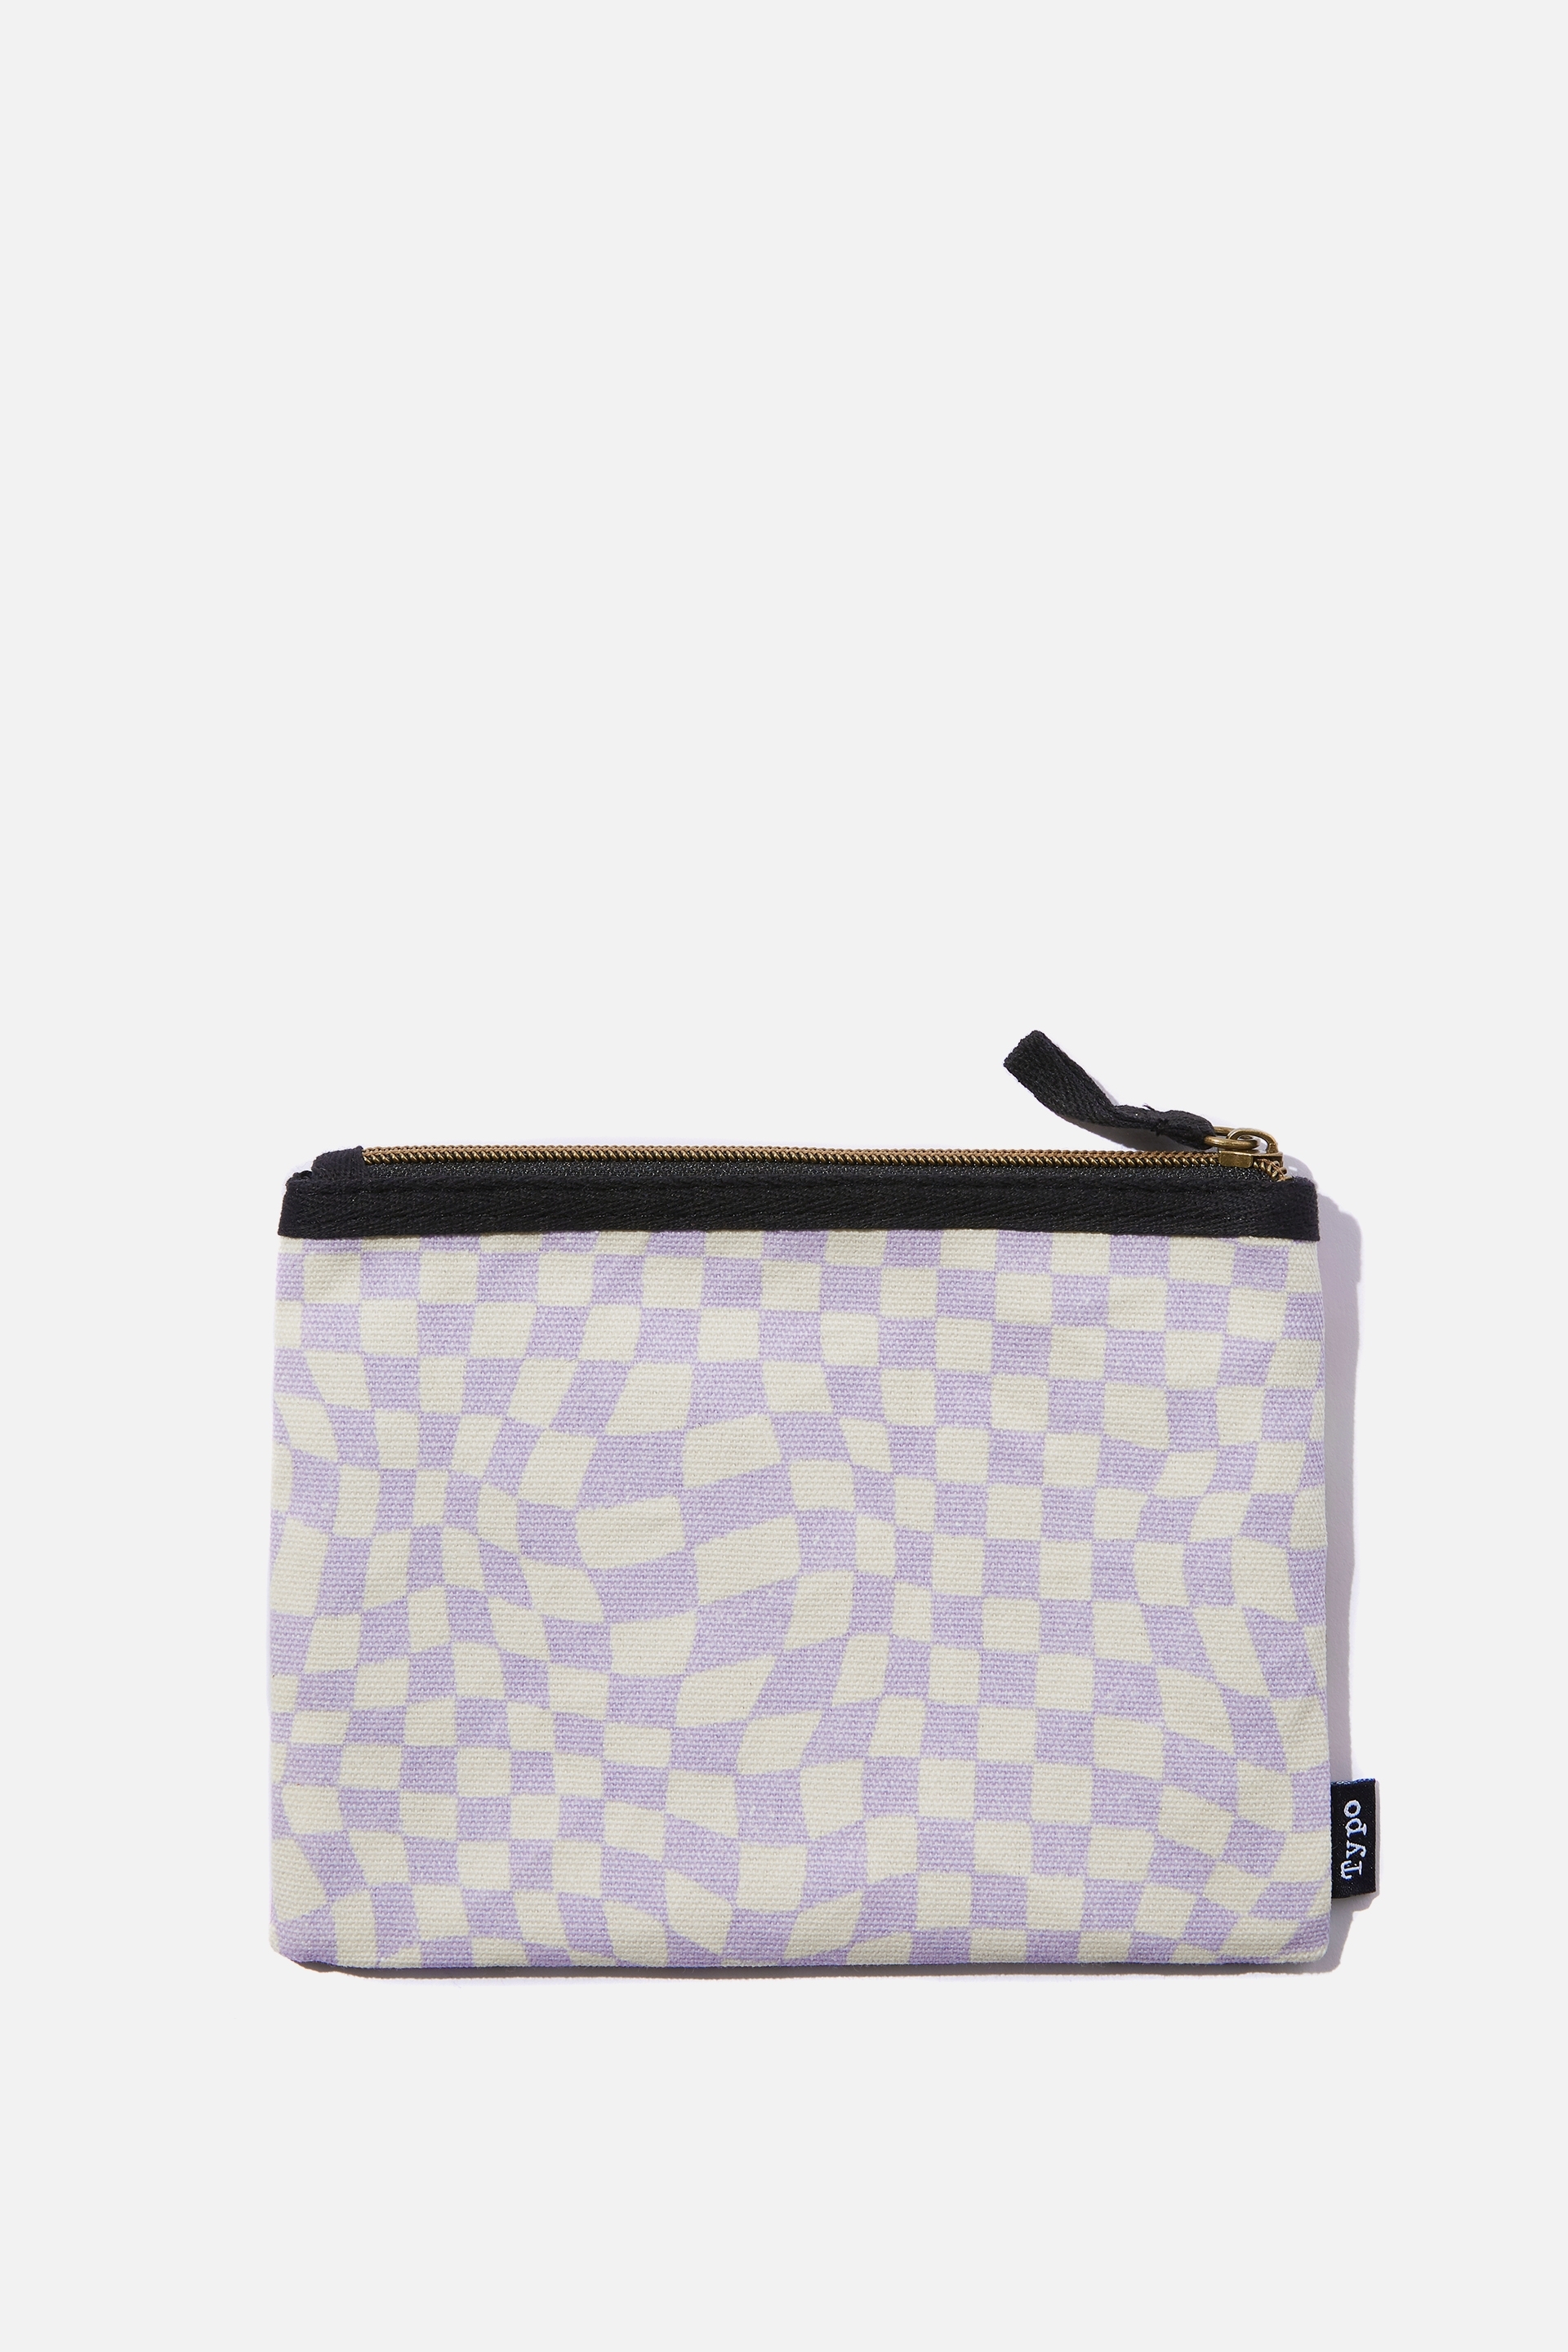 Typo - Spinout Pencil Case - Warp checkboard lilac & floral